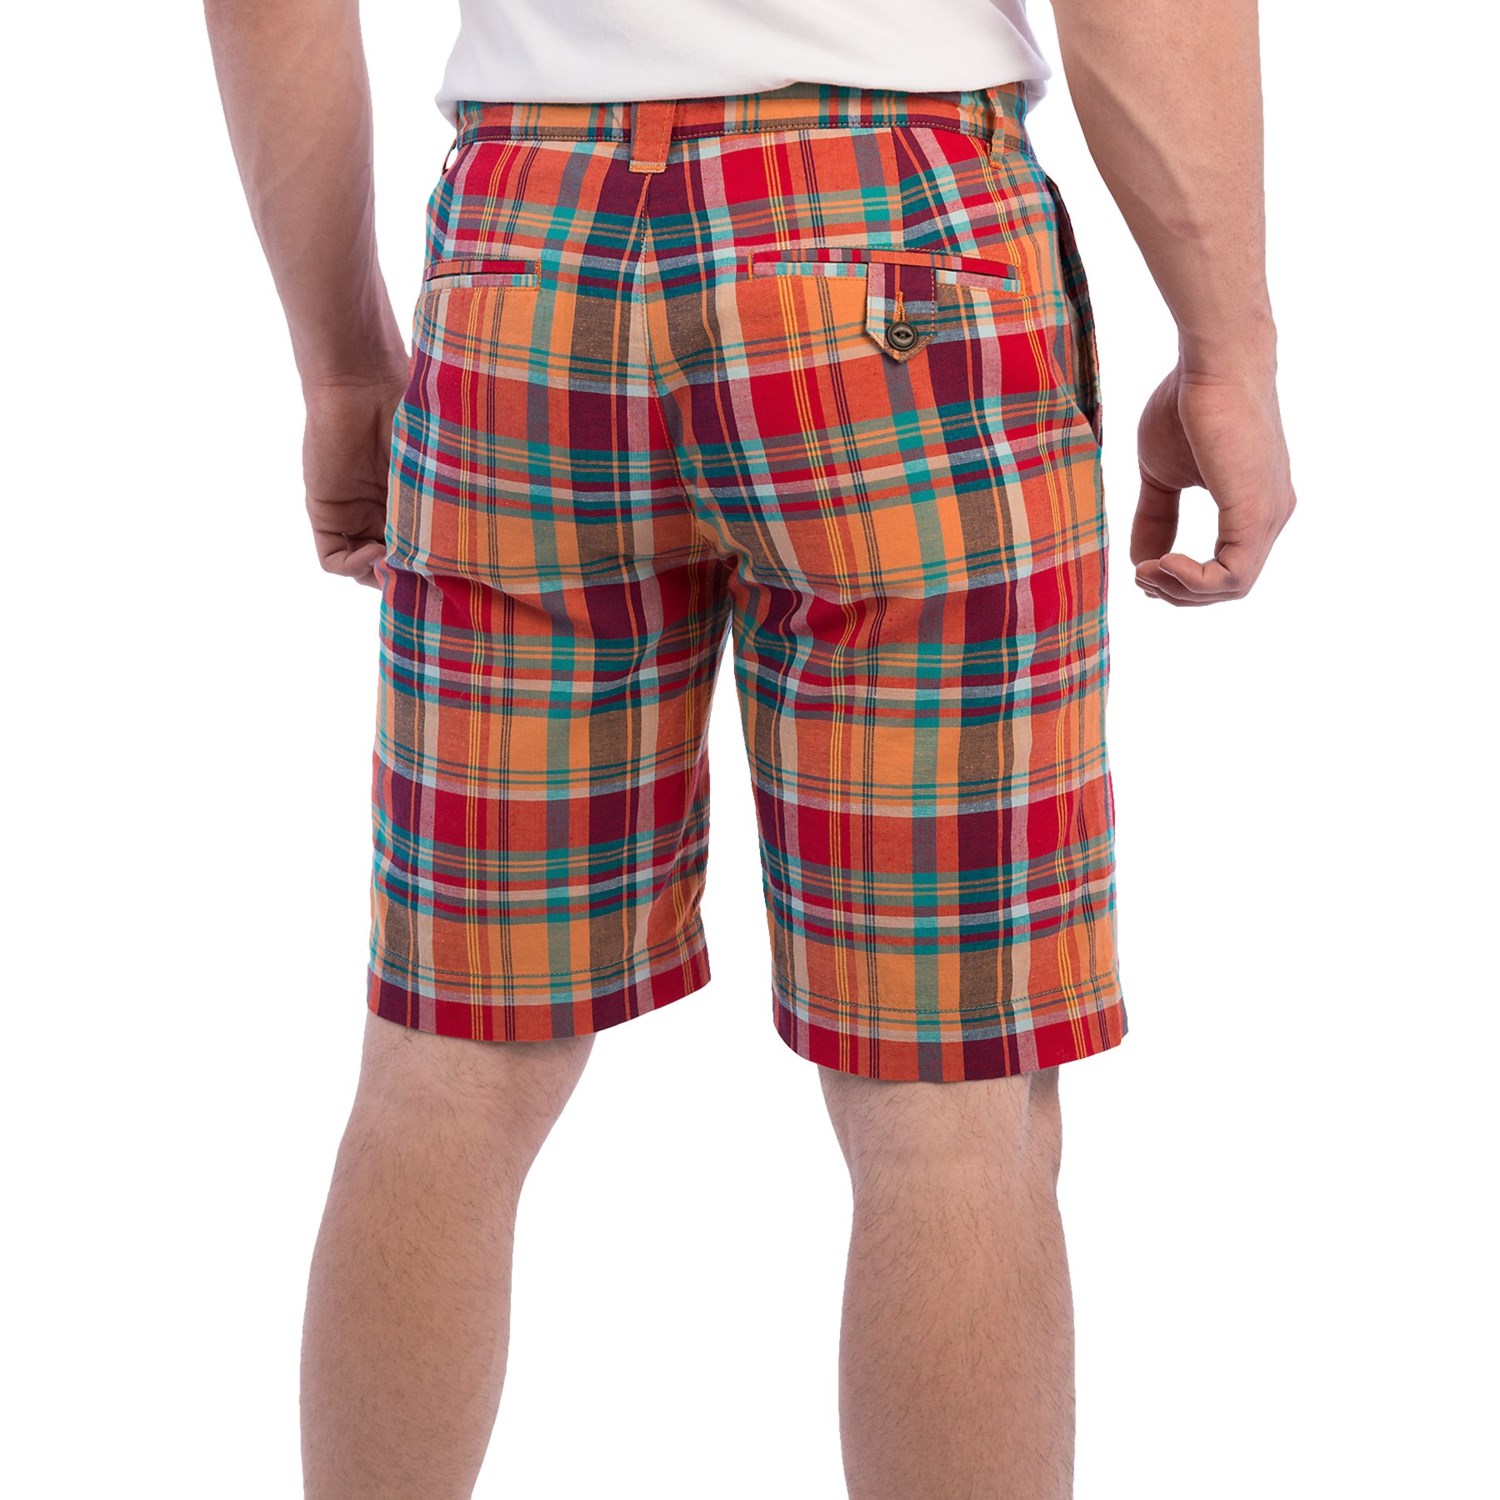 Plaid Shorts For Men 70